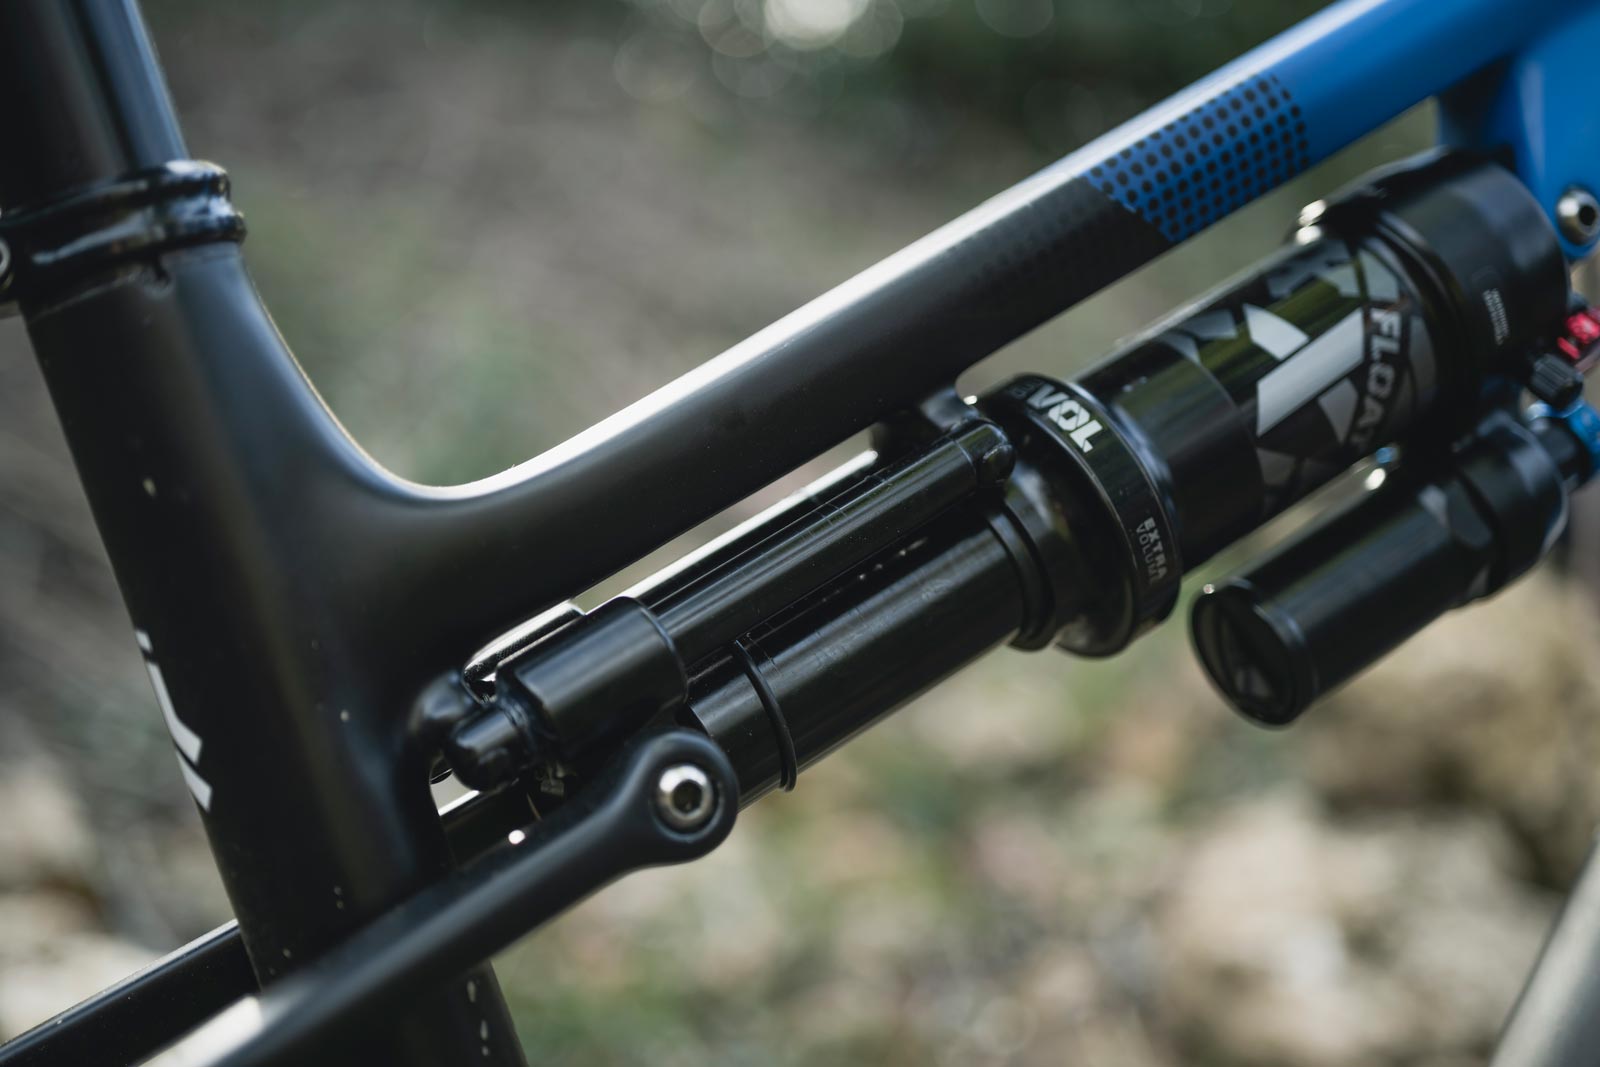 2022 arc8 essential trail bike with flex stays slider guided shock